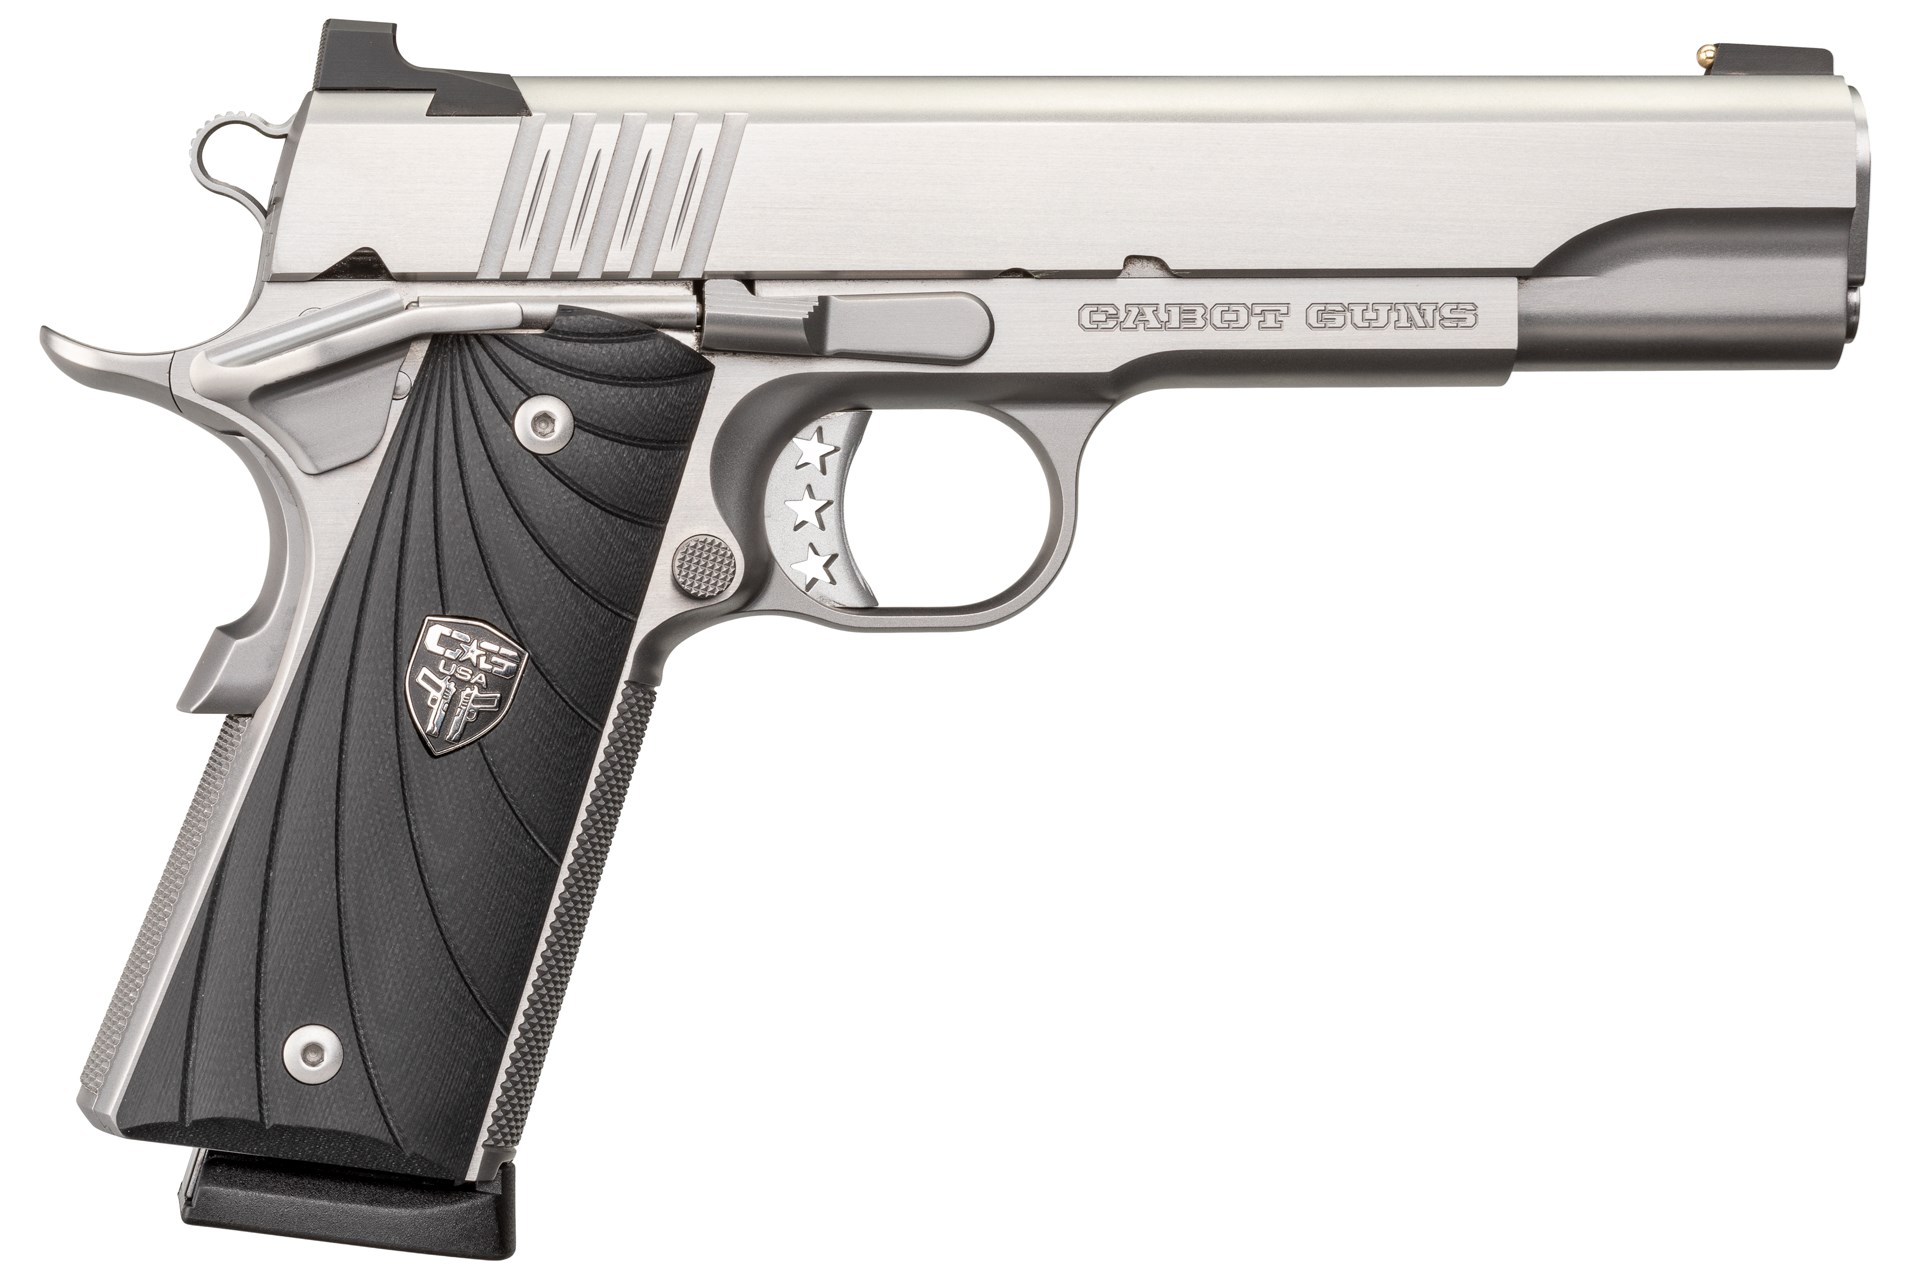 right-side view of Cabot Guns Southpaw M1911 stainless steel gun handgun pistol silver finish black grips white background